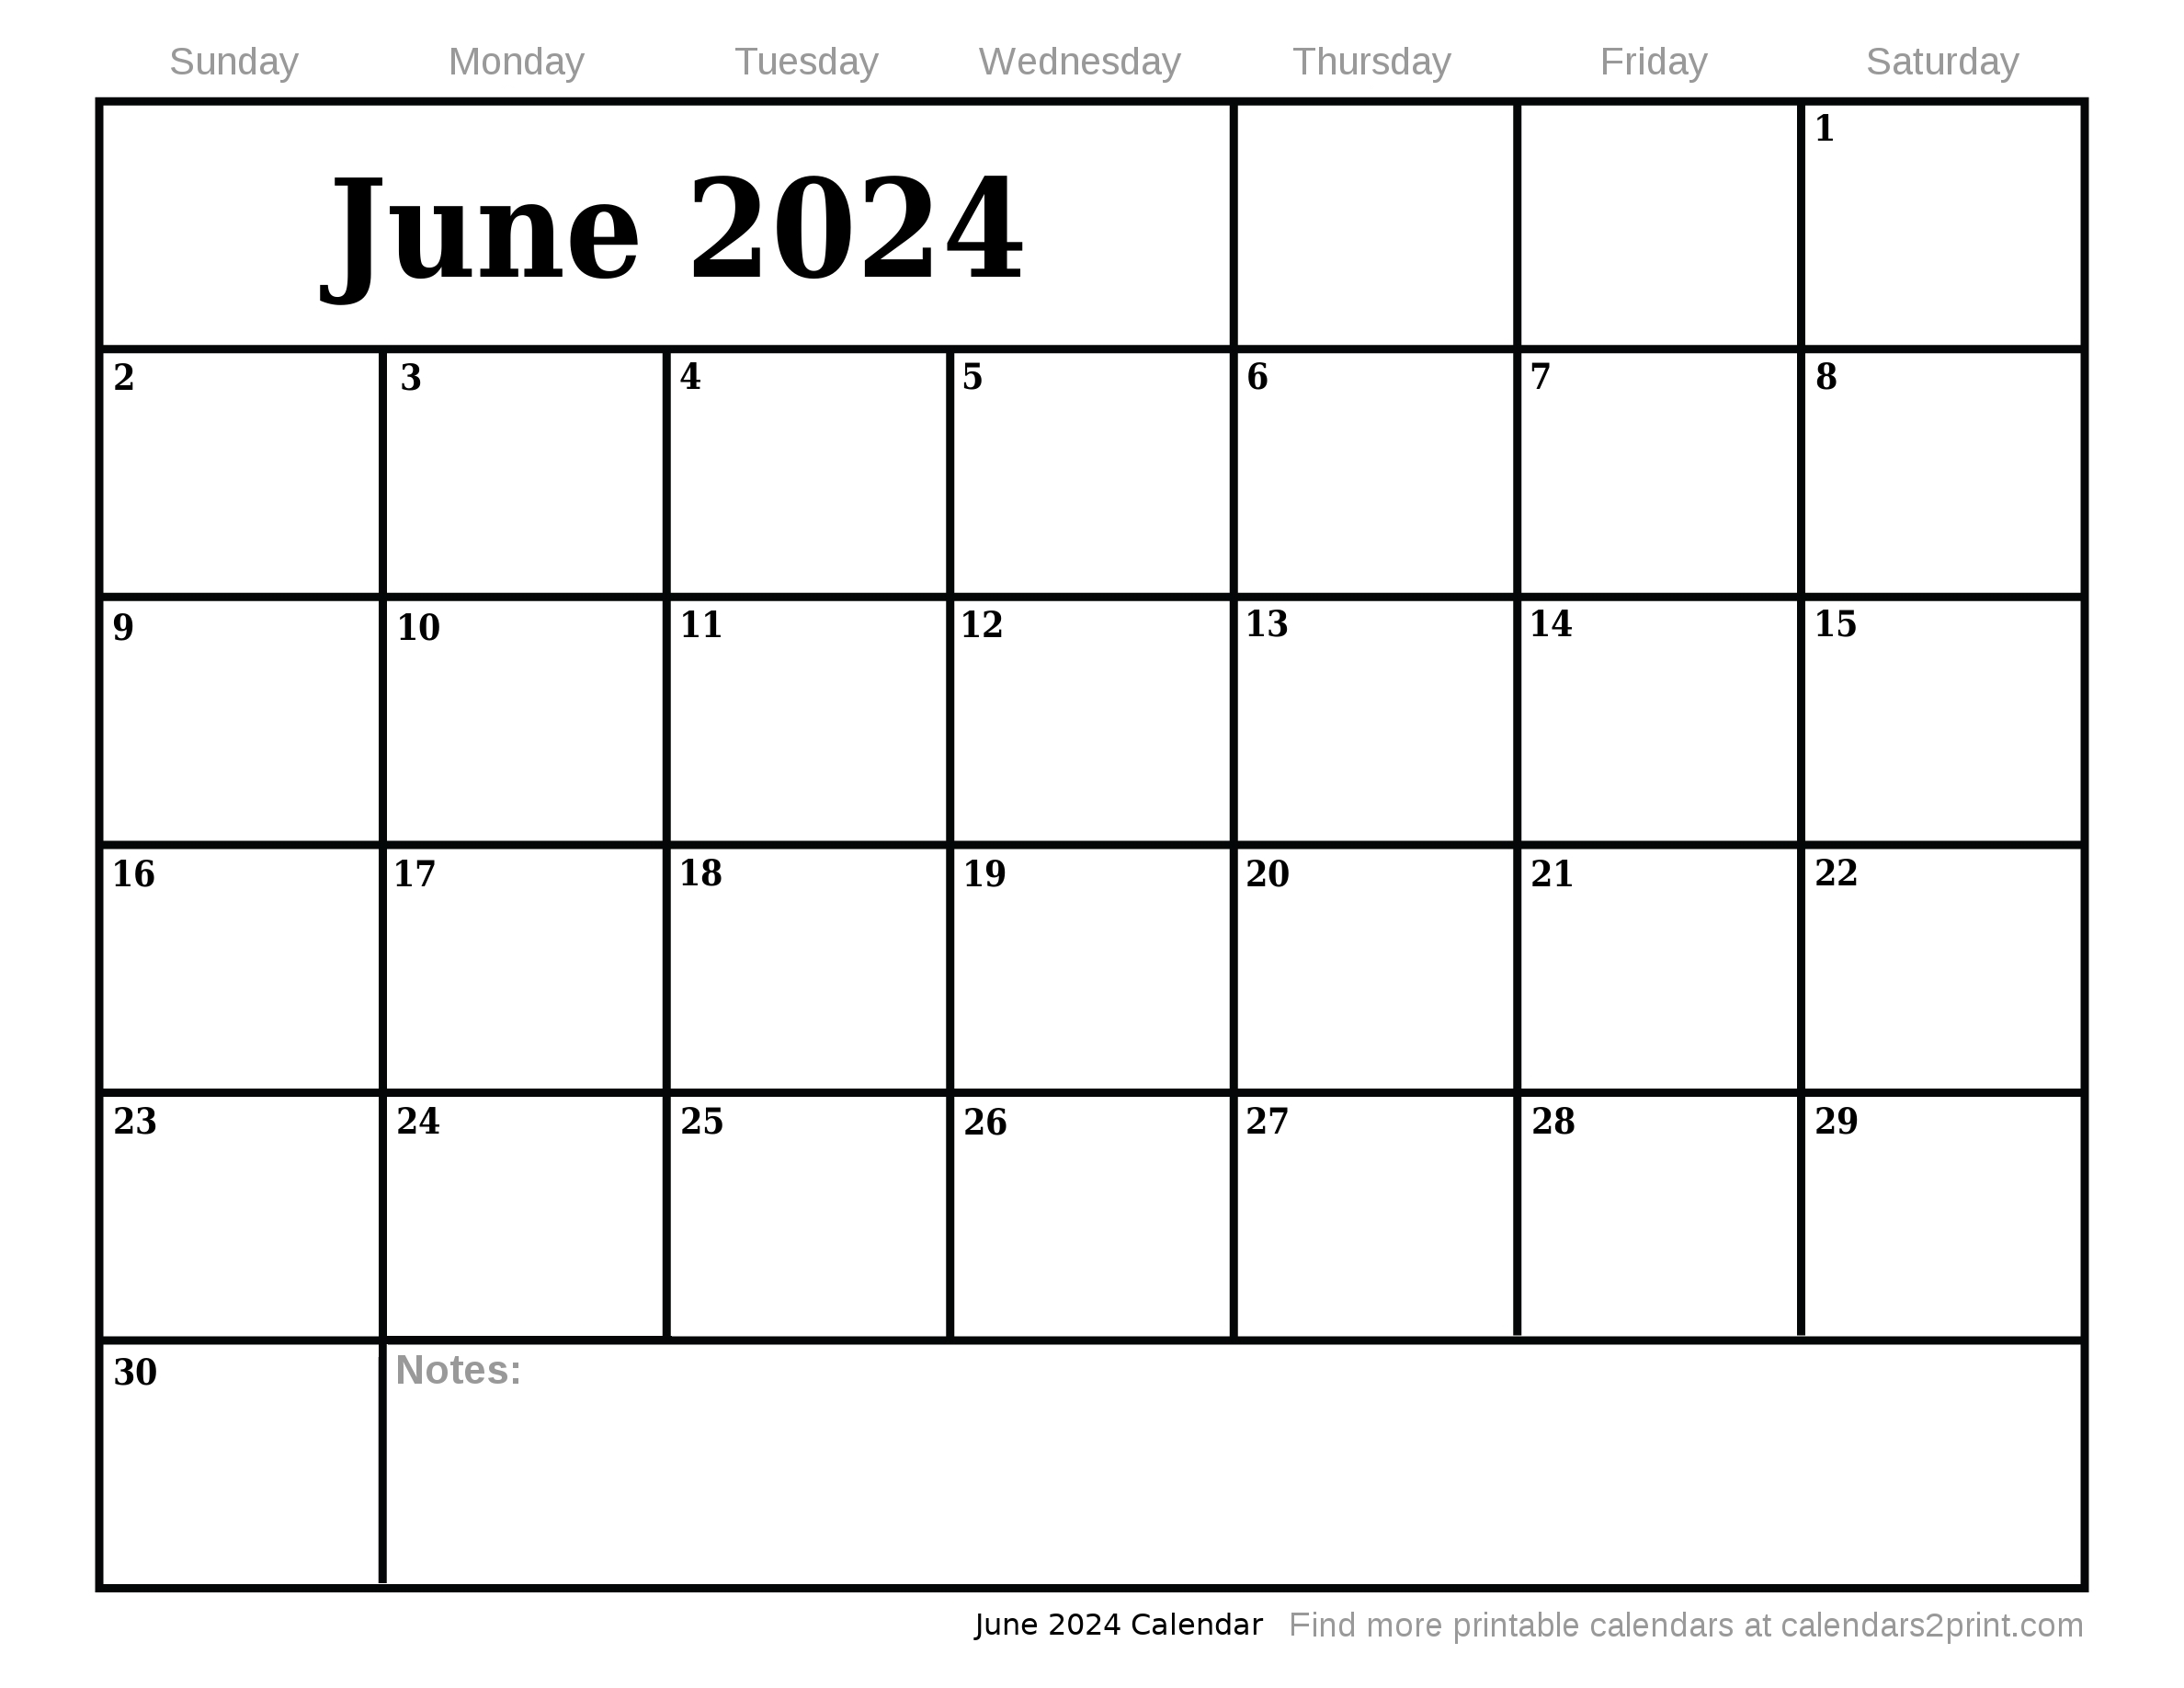 Jun 2024 Printable Calendar